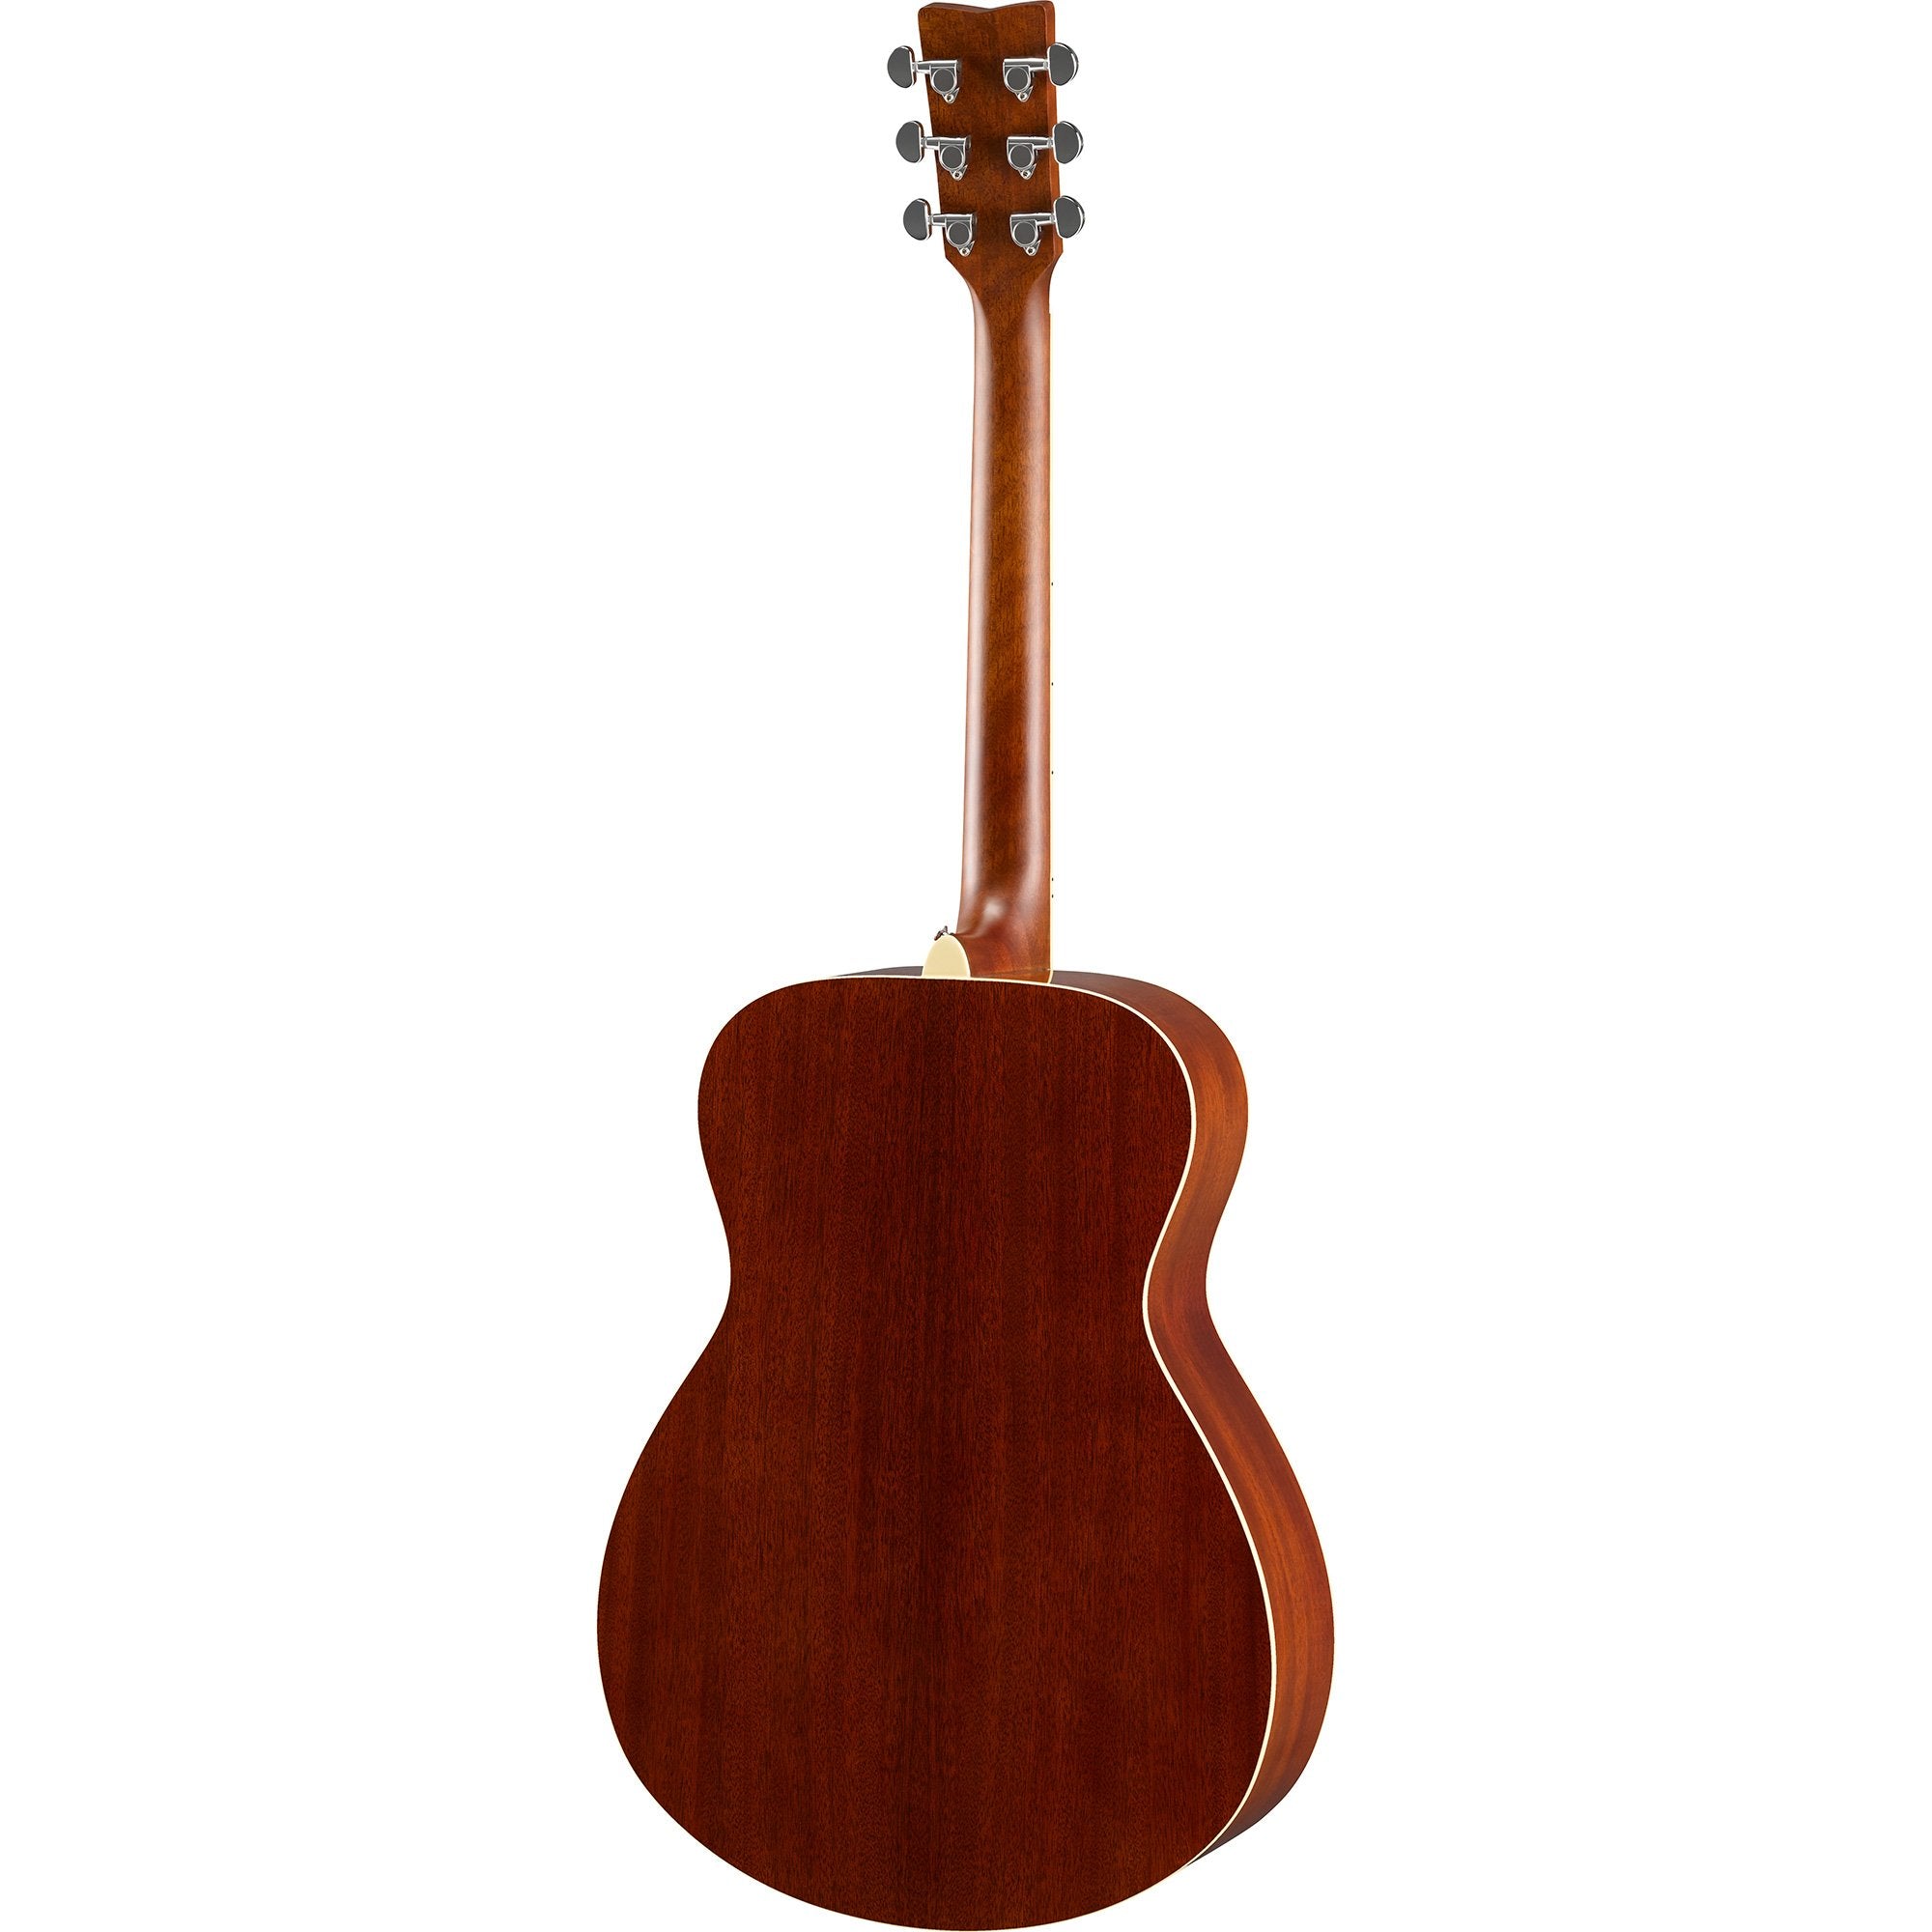 Yamaha FS820 Acoustic Guitar, Autumn Burst